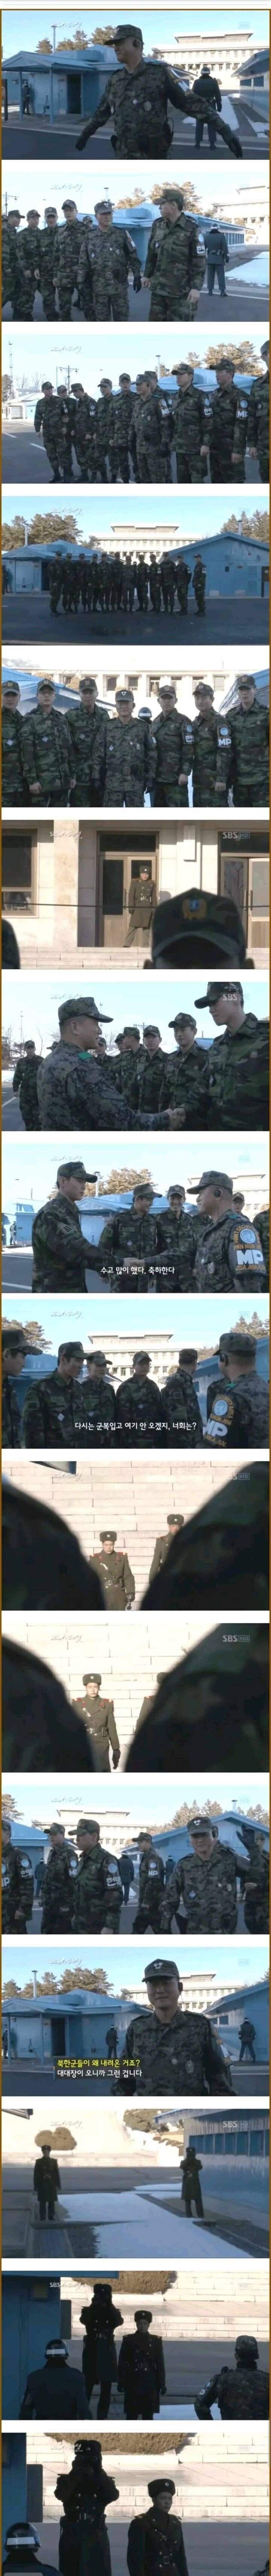 9bcb132ee590127a5e15c3ccc230f245.jpg 북한군 앞에서 전역식하는 국군.jpg